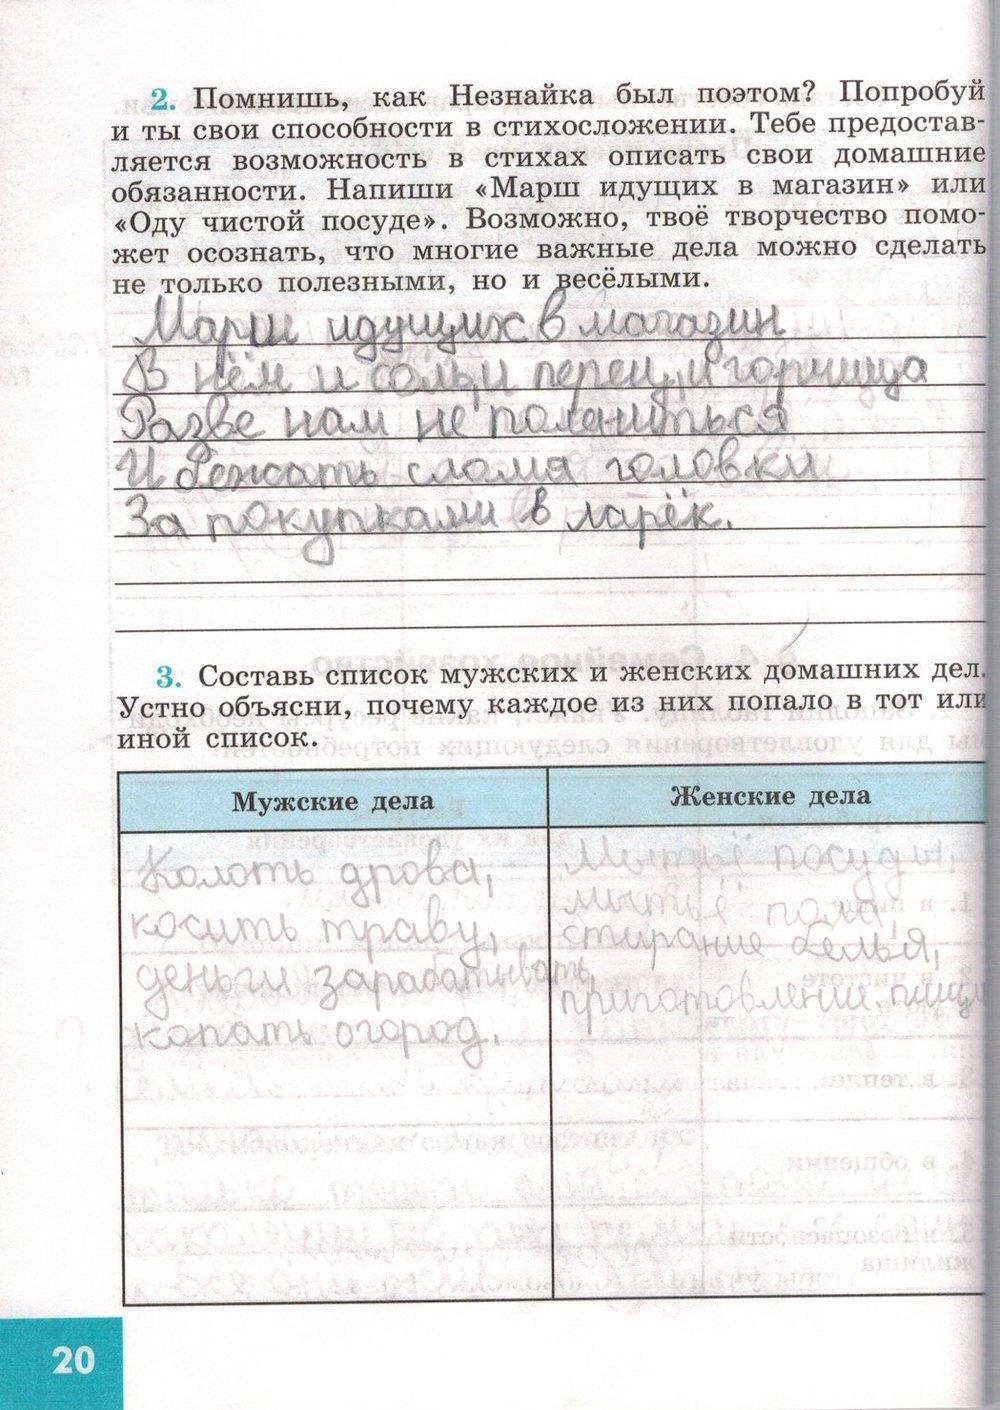 гдз 5 класс рабочая тетрадь страница 20 обществознание Иванова, Хотеенкова